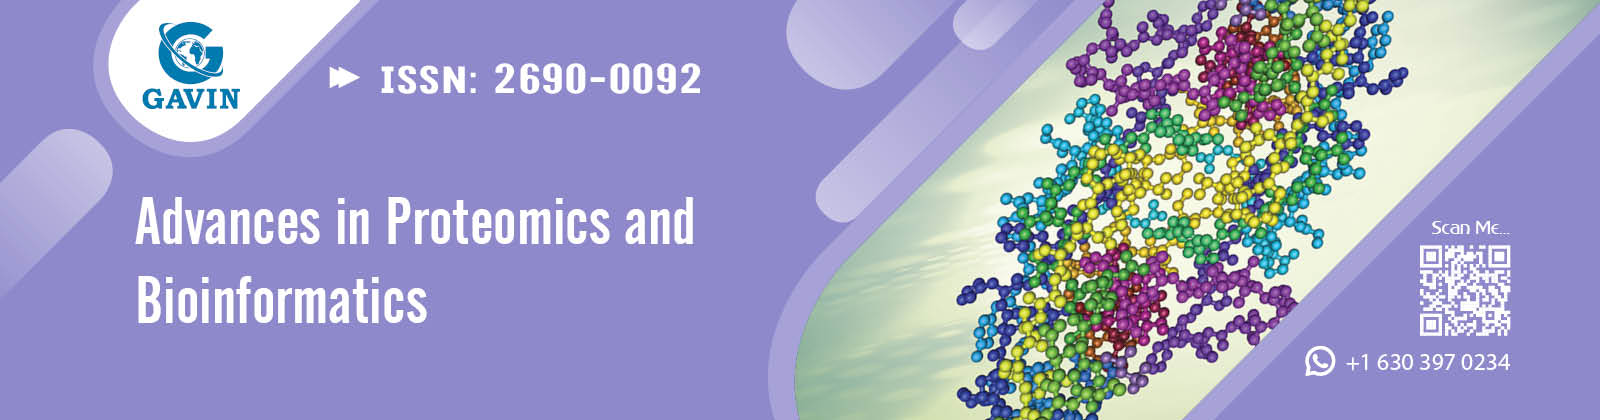 Advances in Proteomics and Bioinformatics